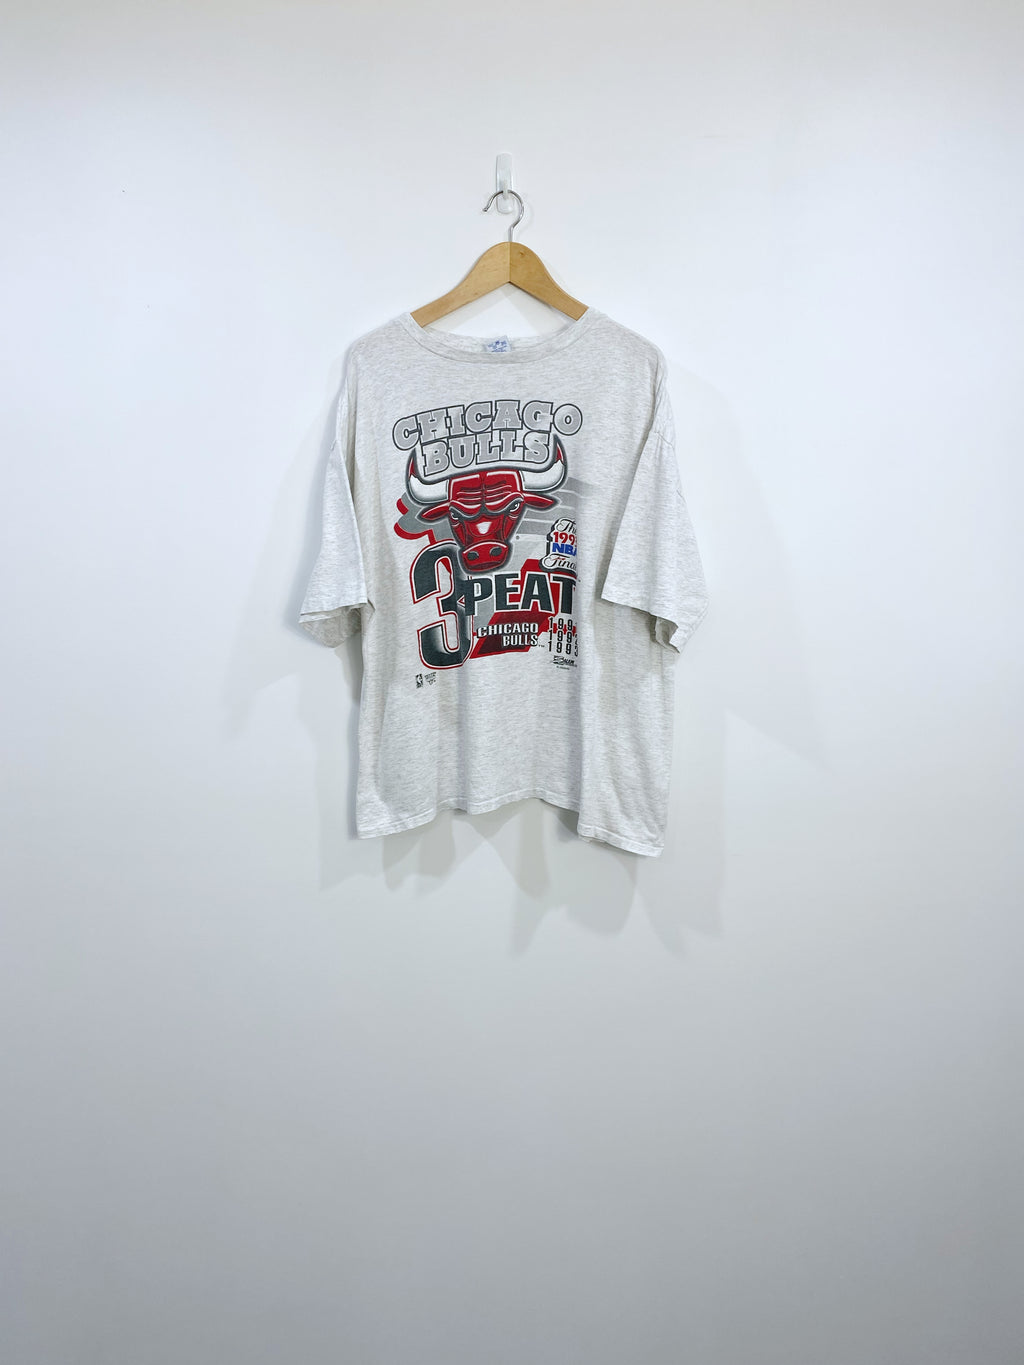 Vintage 1993 Chicago Bulls Championship T-shirt L